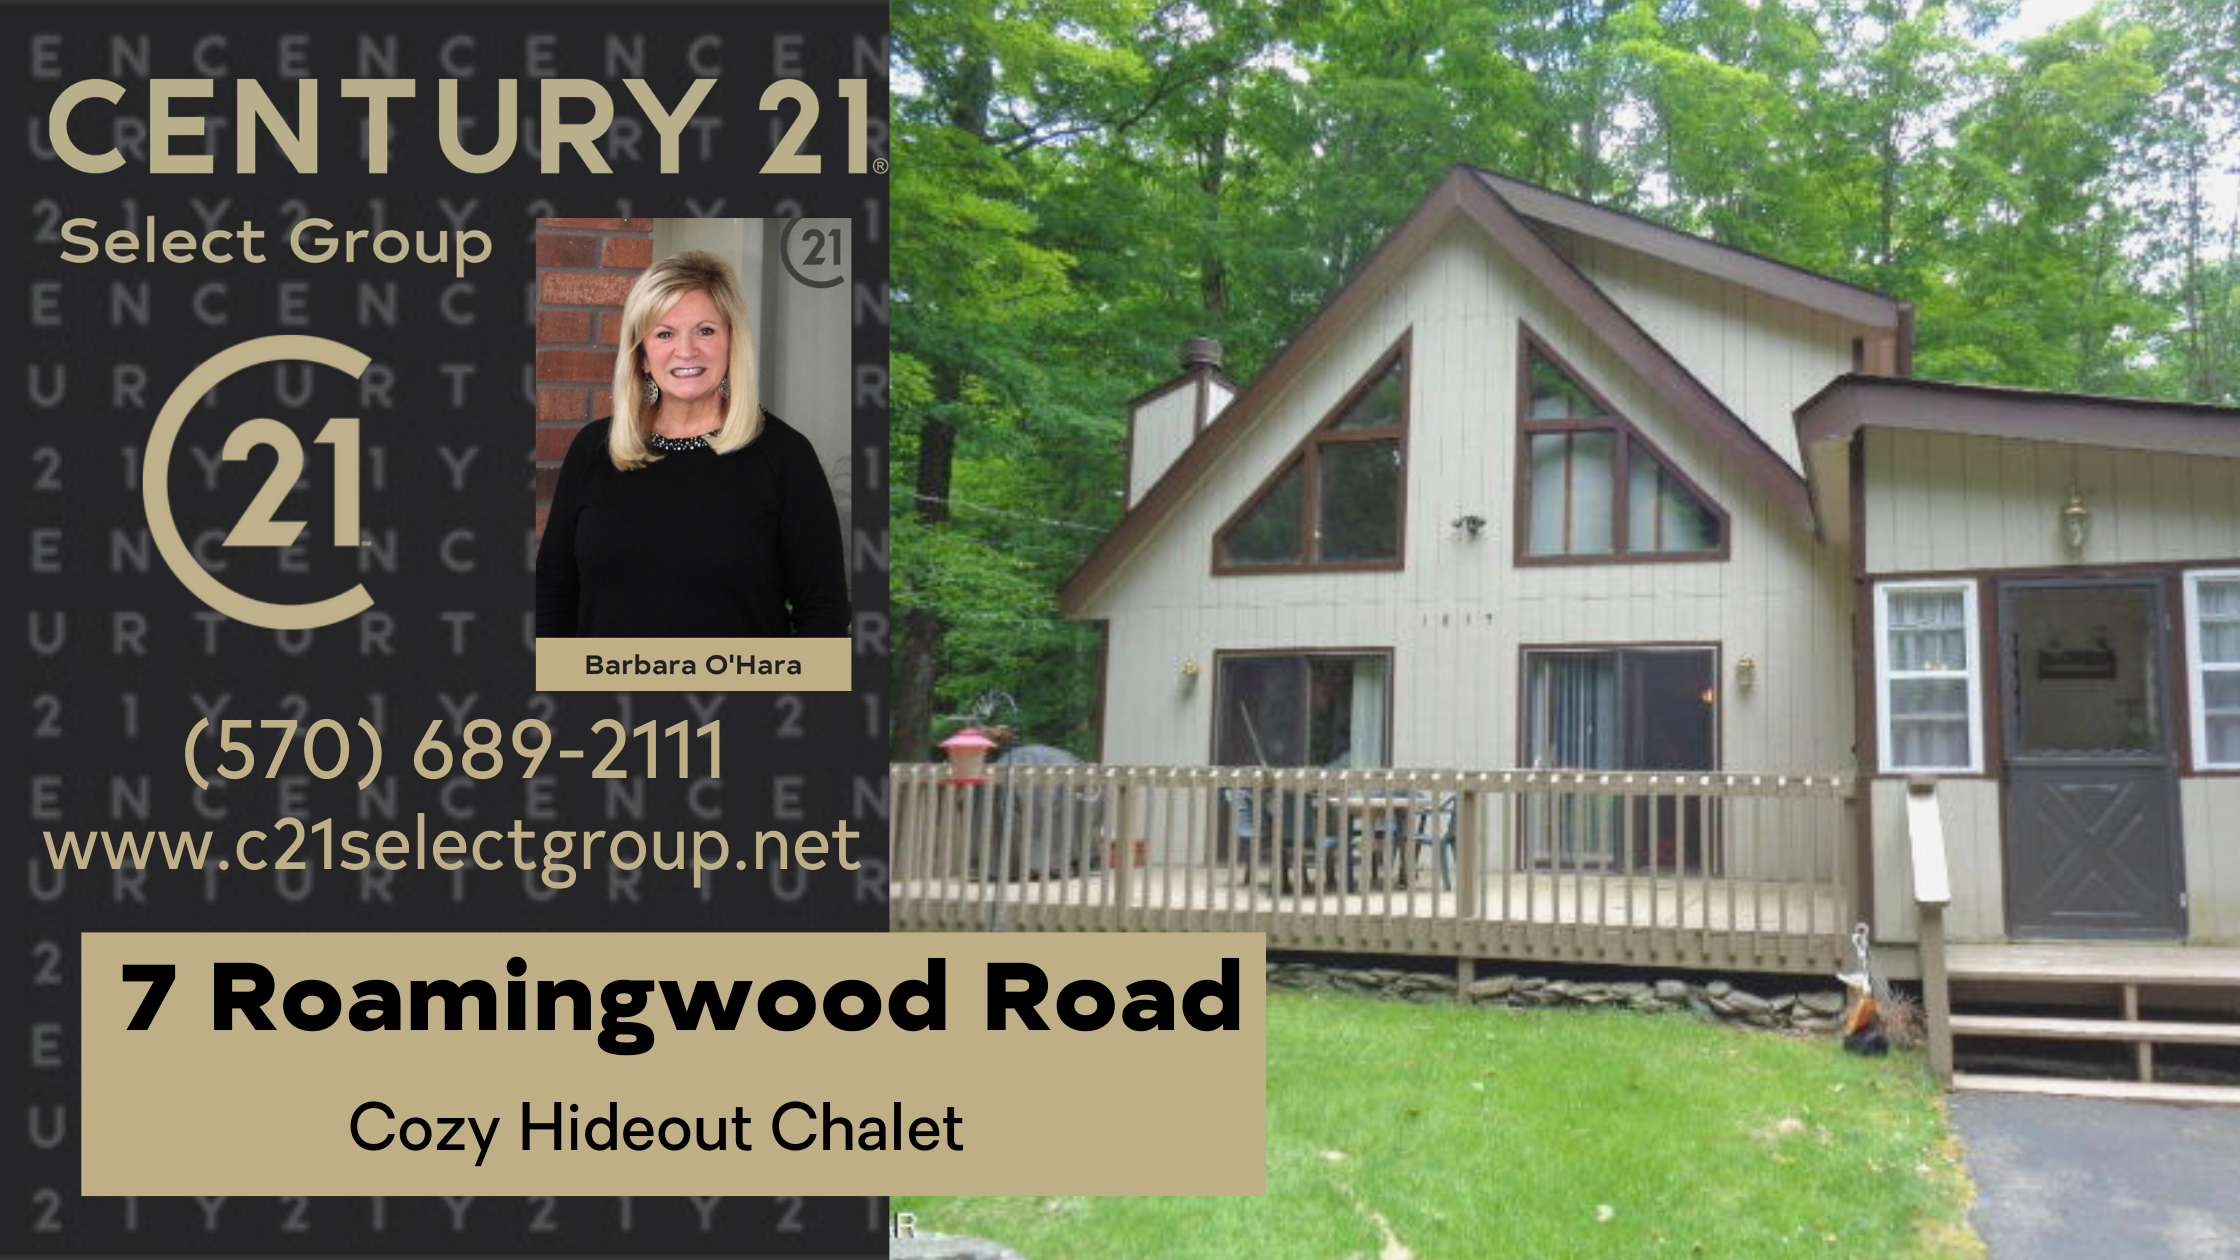 7 Roamingwood Road: Cozy Hideout Chalet